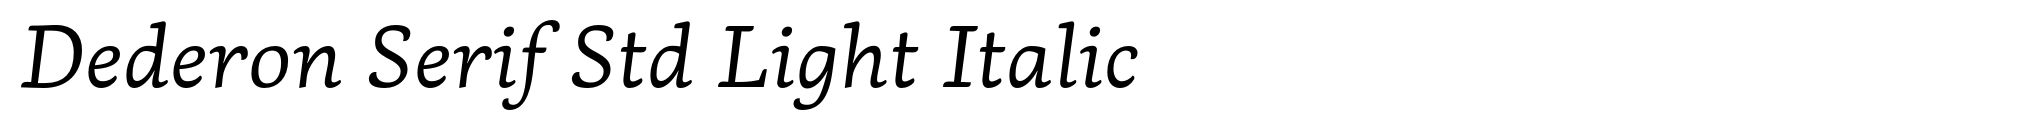 Dederon Serif Std Light Italic image